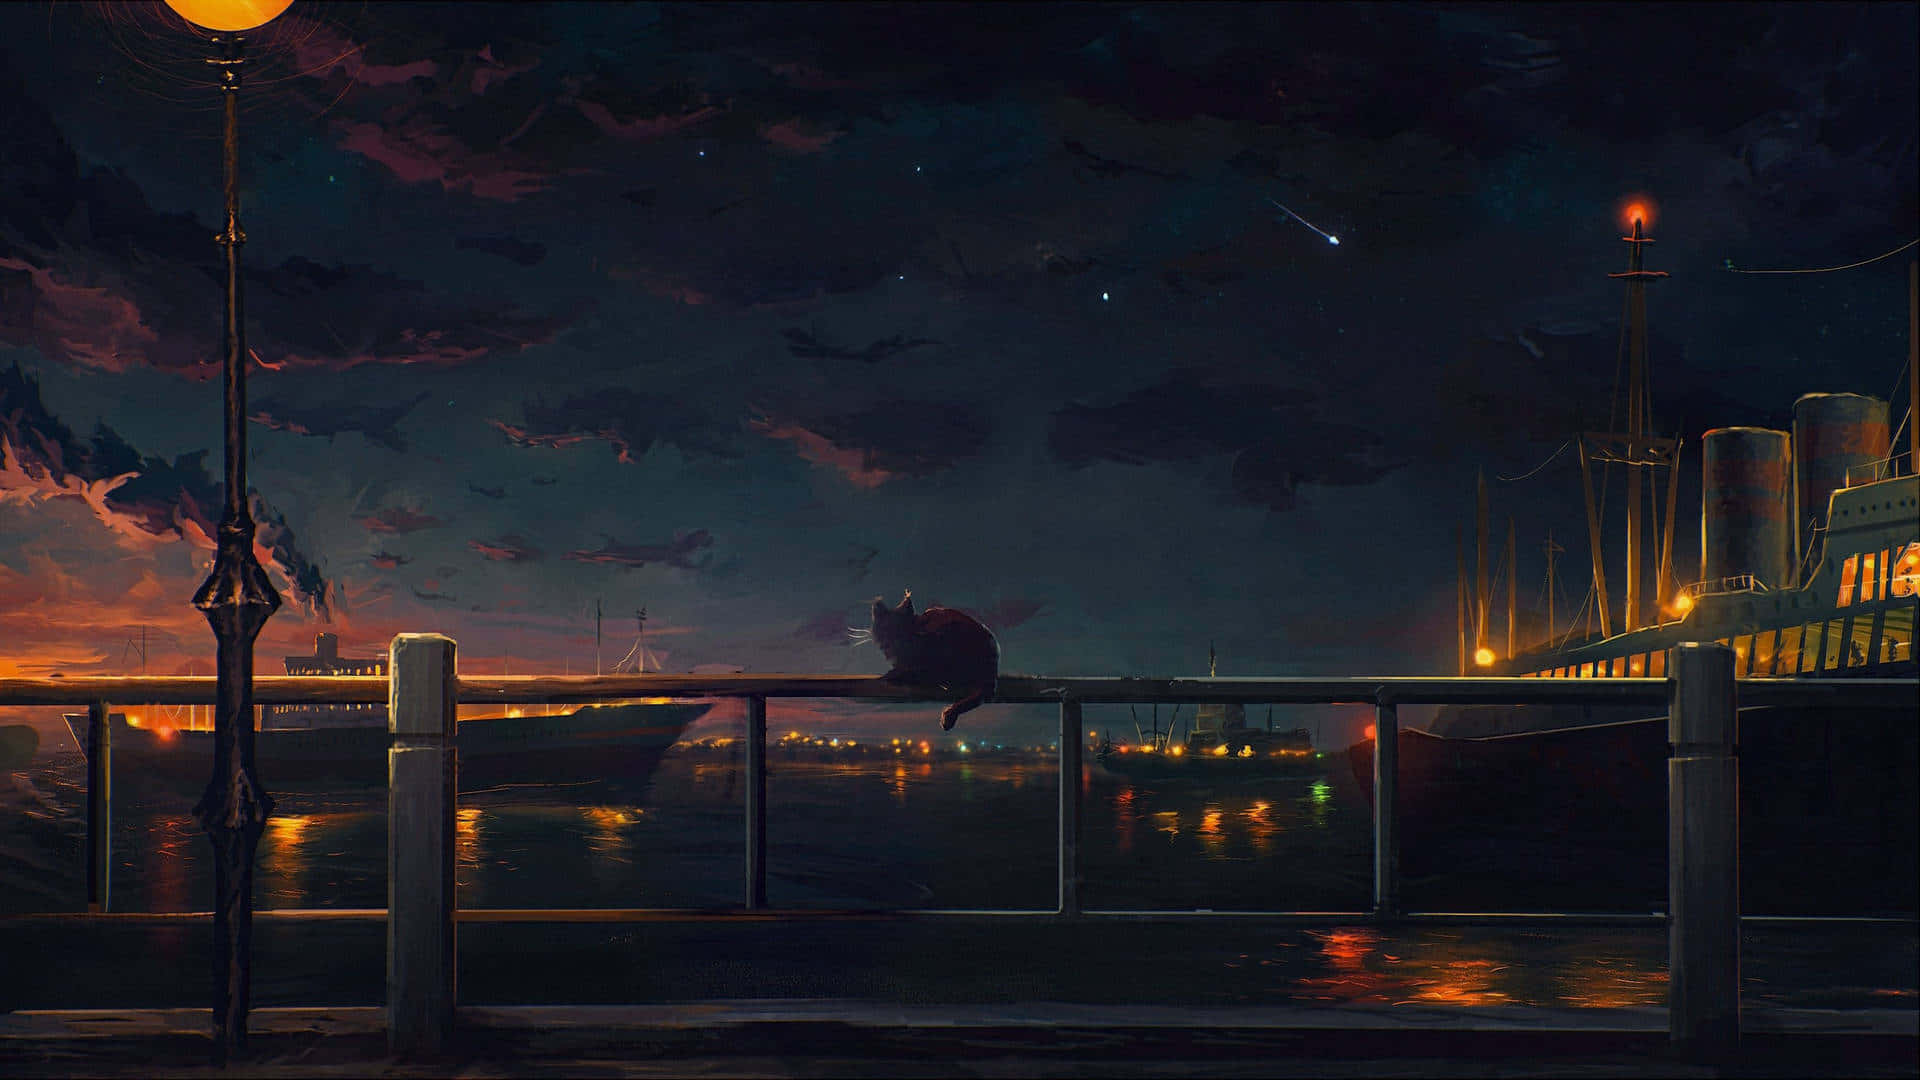 Anime Night Background